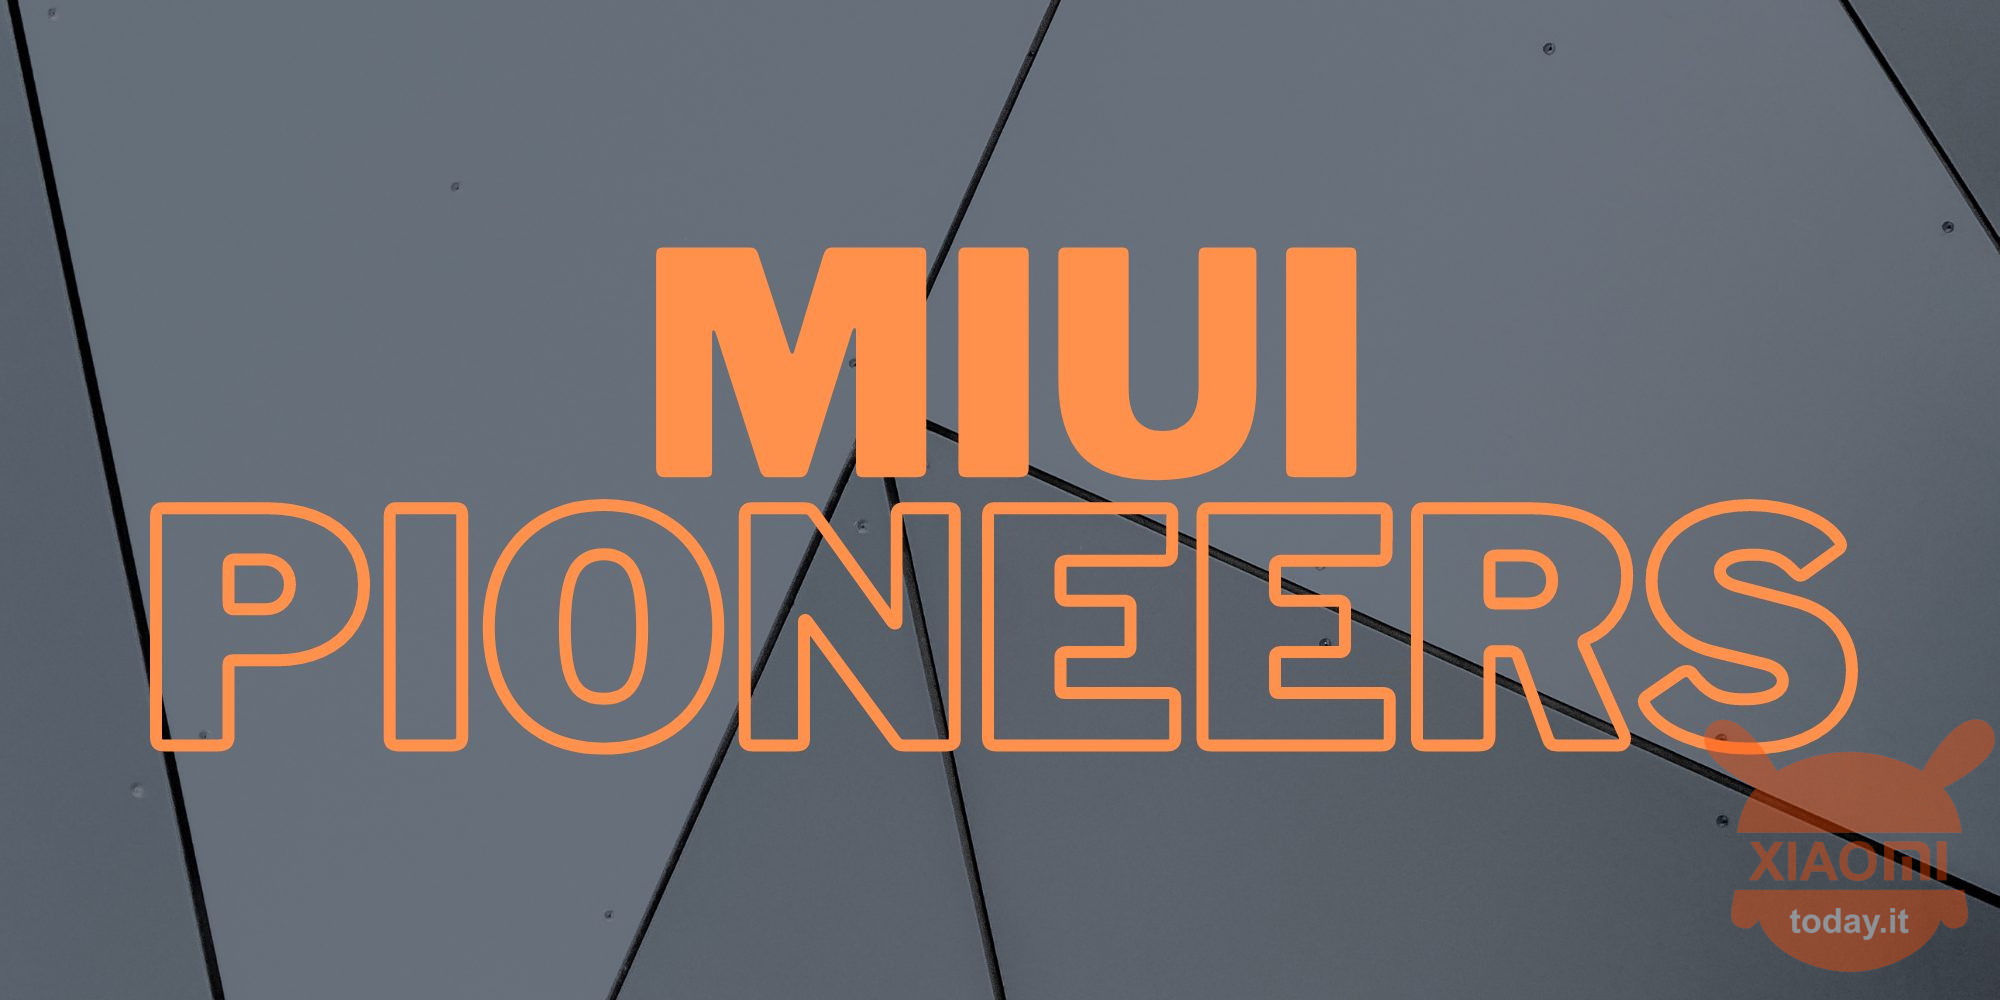 Miui-Pioniere